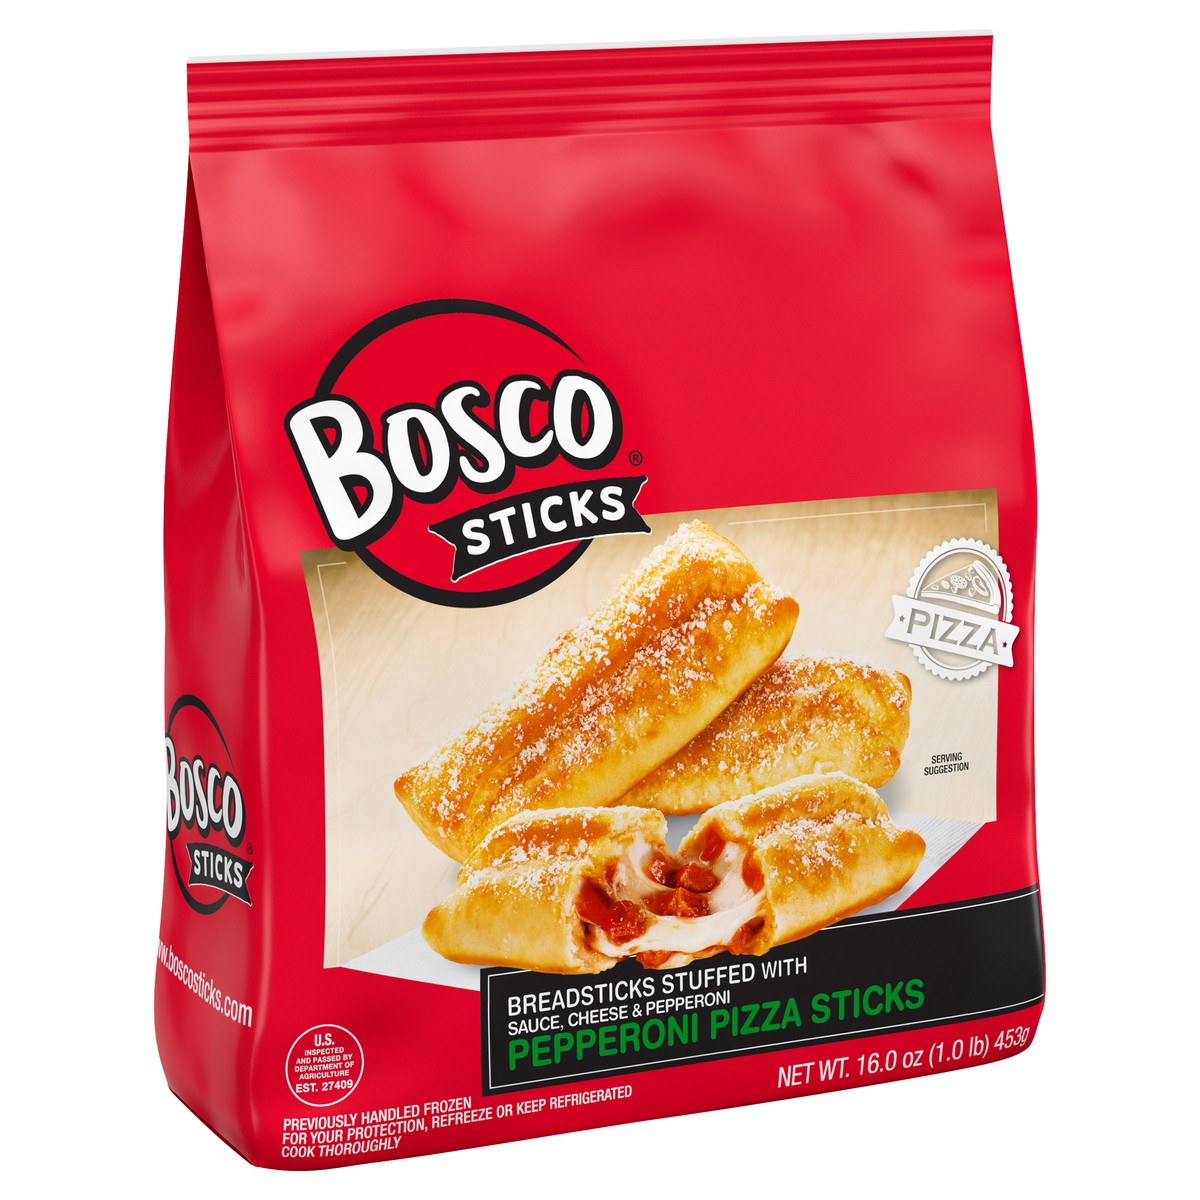 slide 1 of 8, BOSCOS PIZZA Bosco Pepperoni Pizza Stuffed Breadsticks, 14 oz (Frozen), 396.89 g